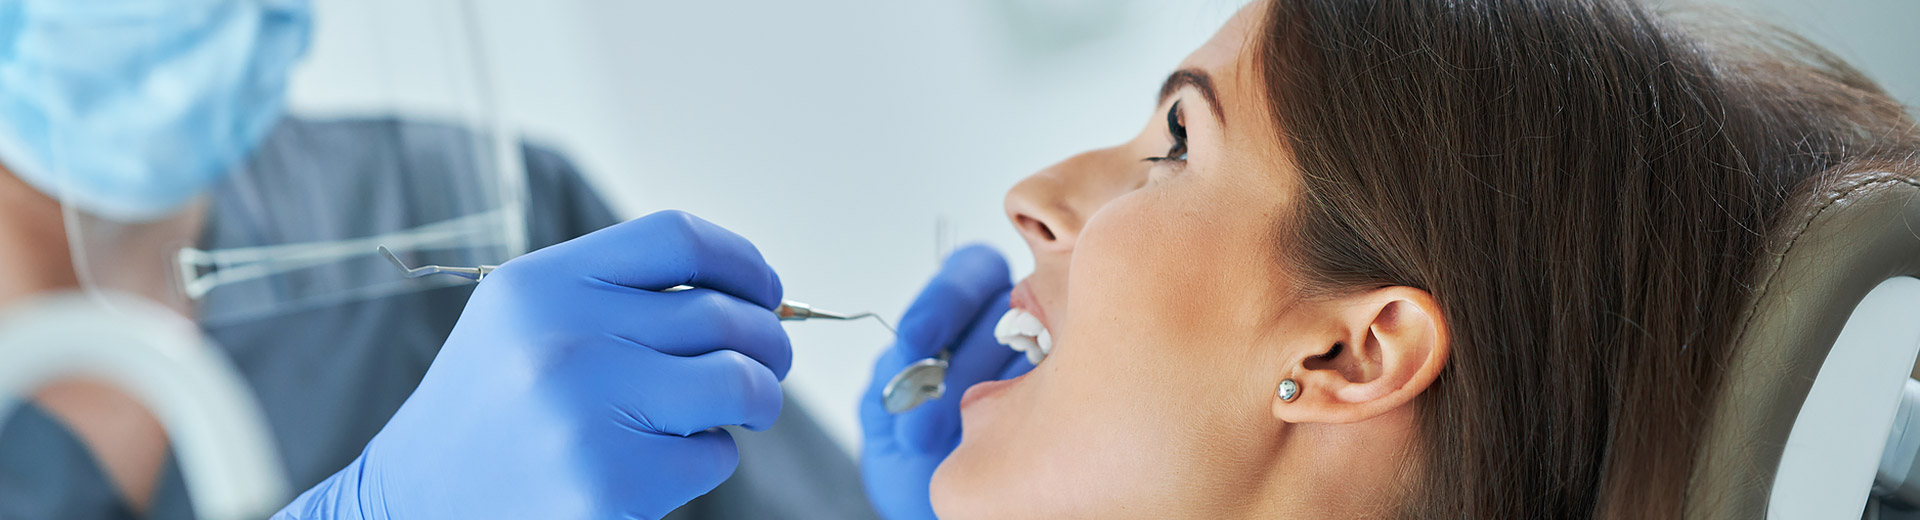 A patient is receiving dental implants.